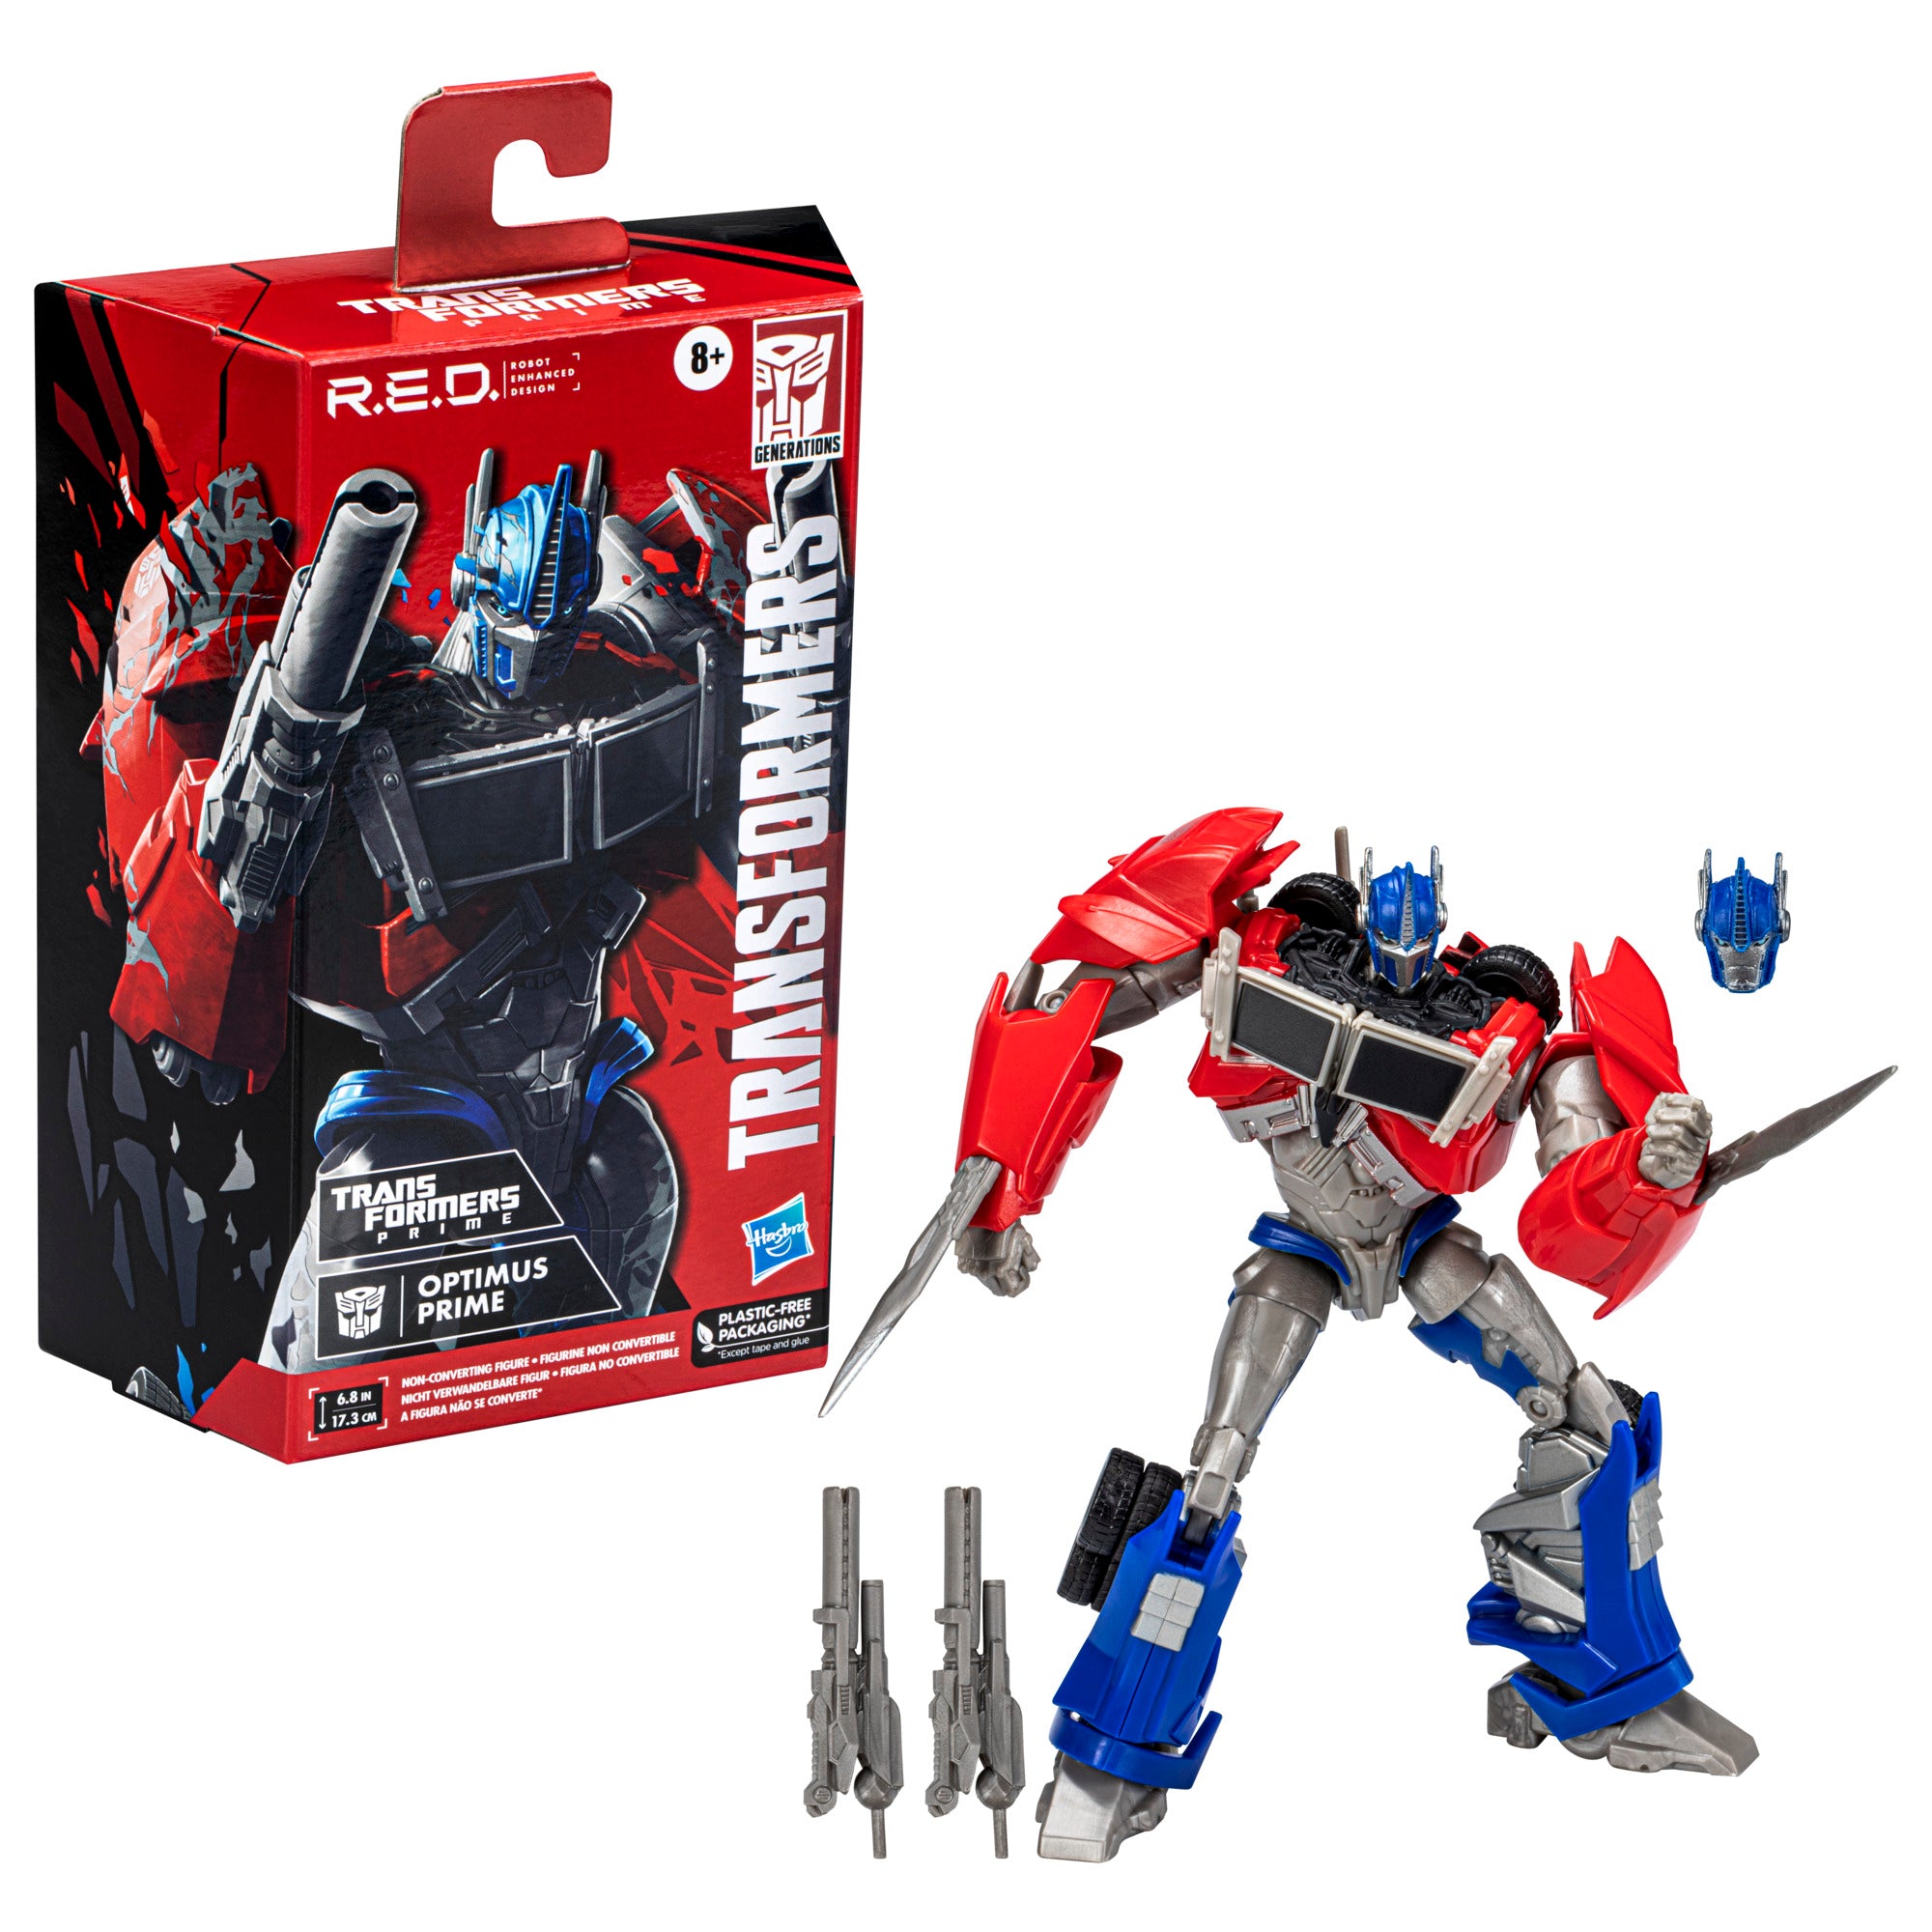 Transformers r. Hasbro Transformers Prime r.e.d. Optimus Prime Red Action Figure New in stock. Hasbro Transformers r.e.d. Knockout. Оптимус Прайм статуэтка. Transformers Nova Prime Figure.